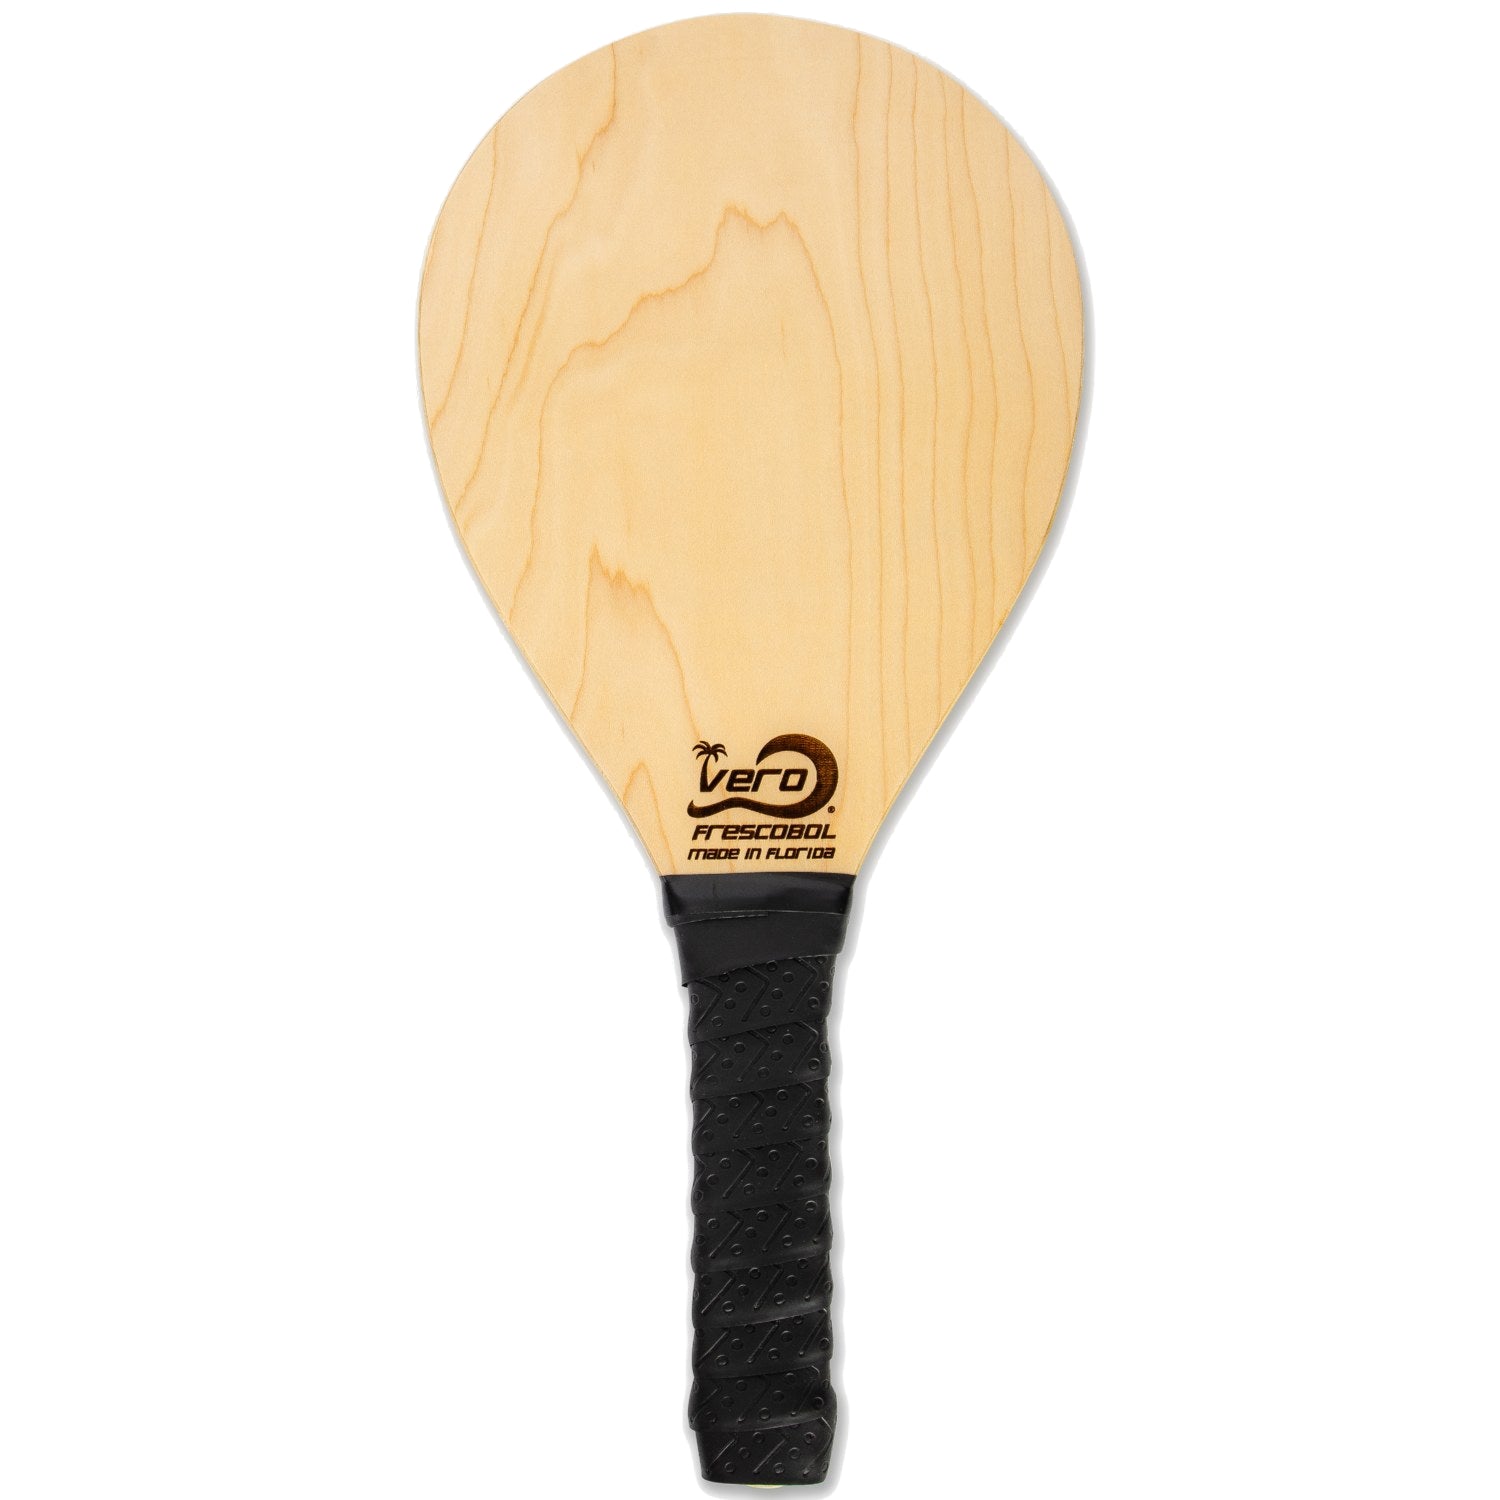 American Birch Wood Scratch-n-dent Frescobol Paddle, Pro model